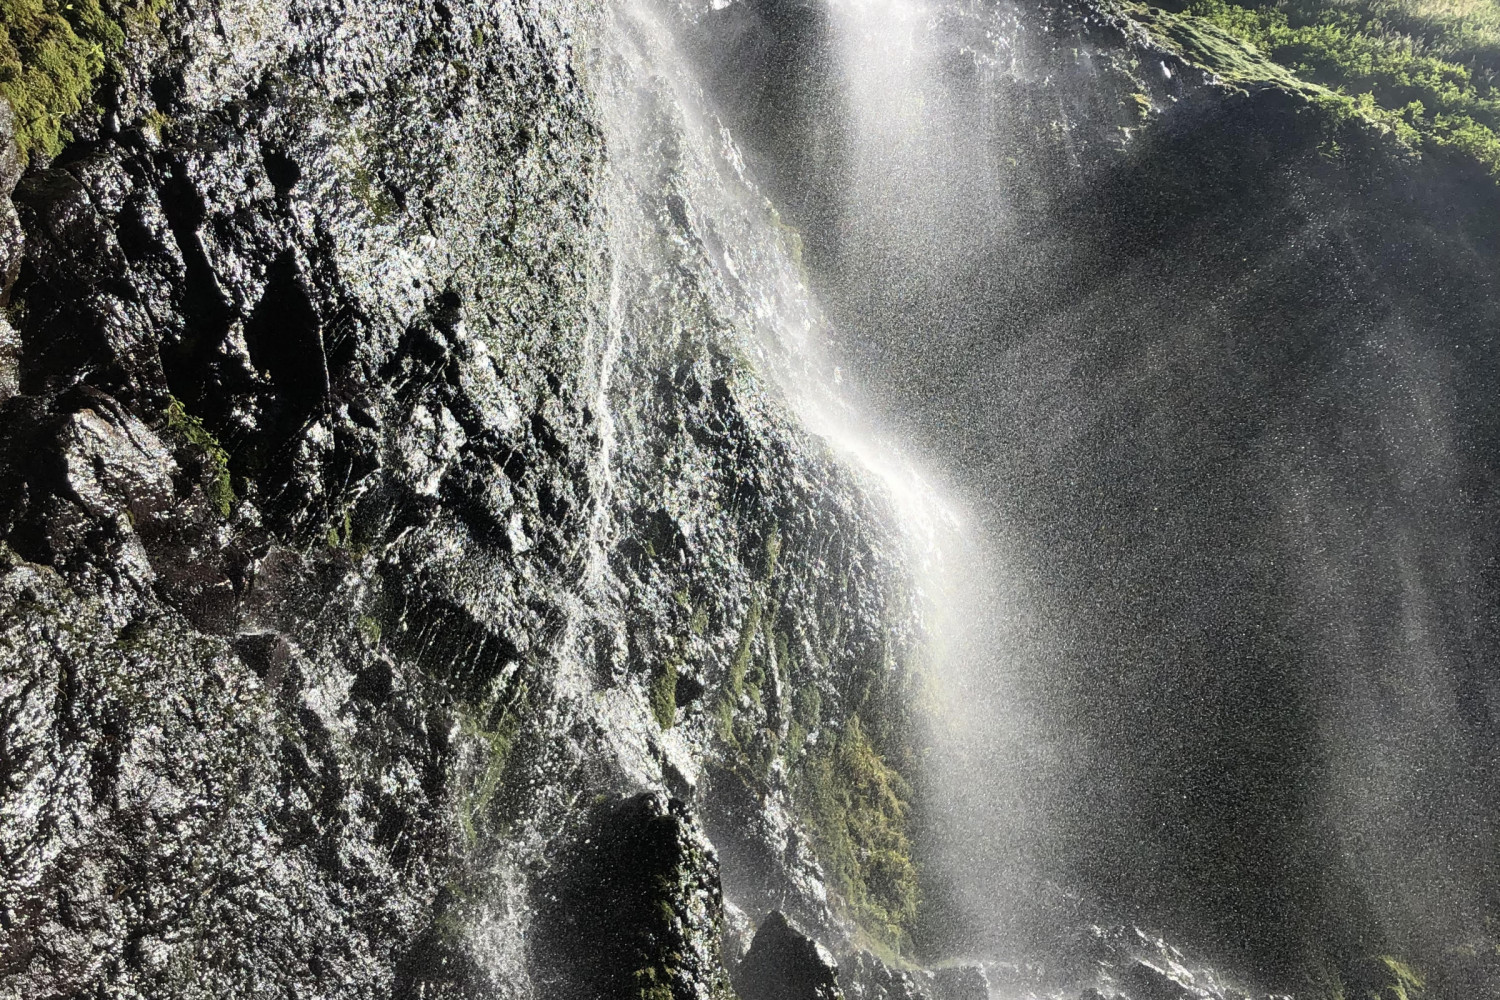 A waterfall in Nicaragua.